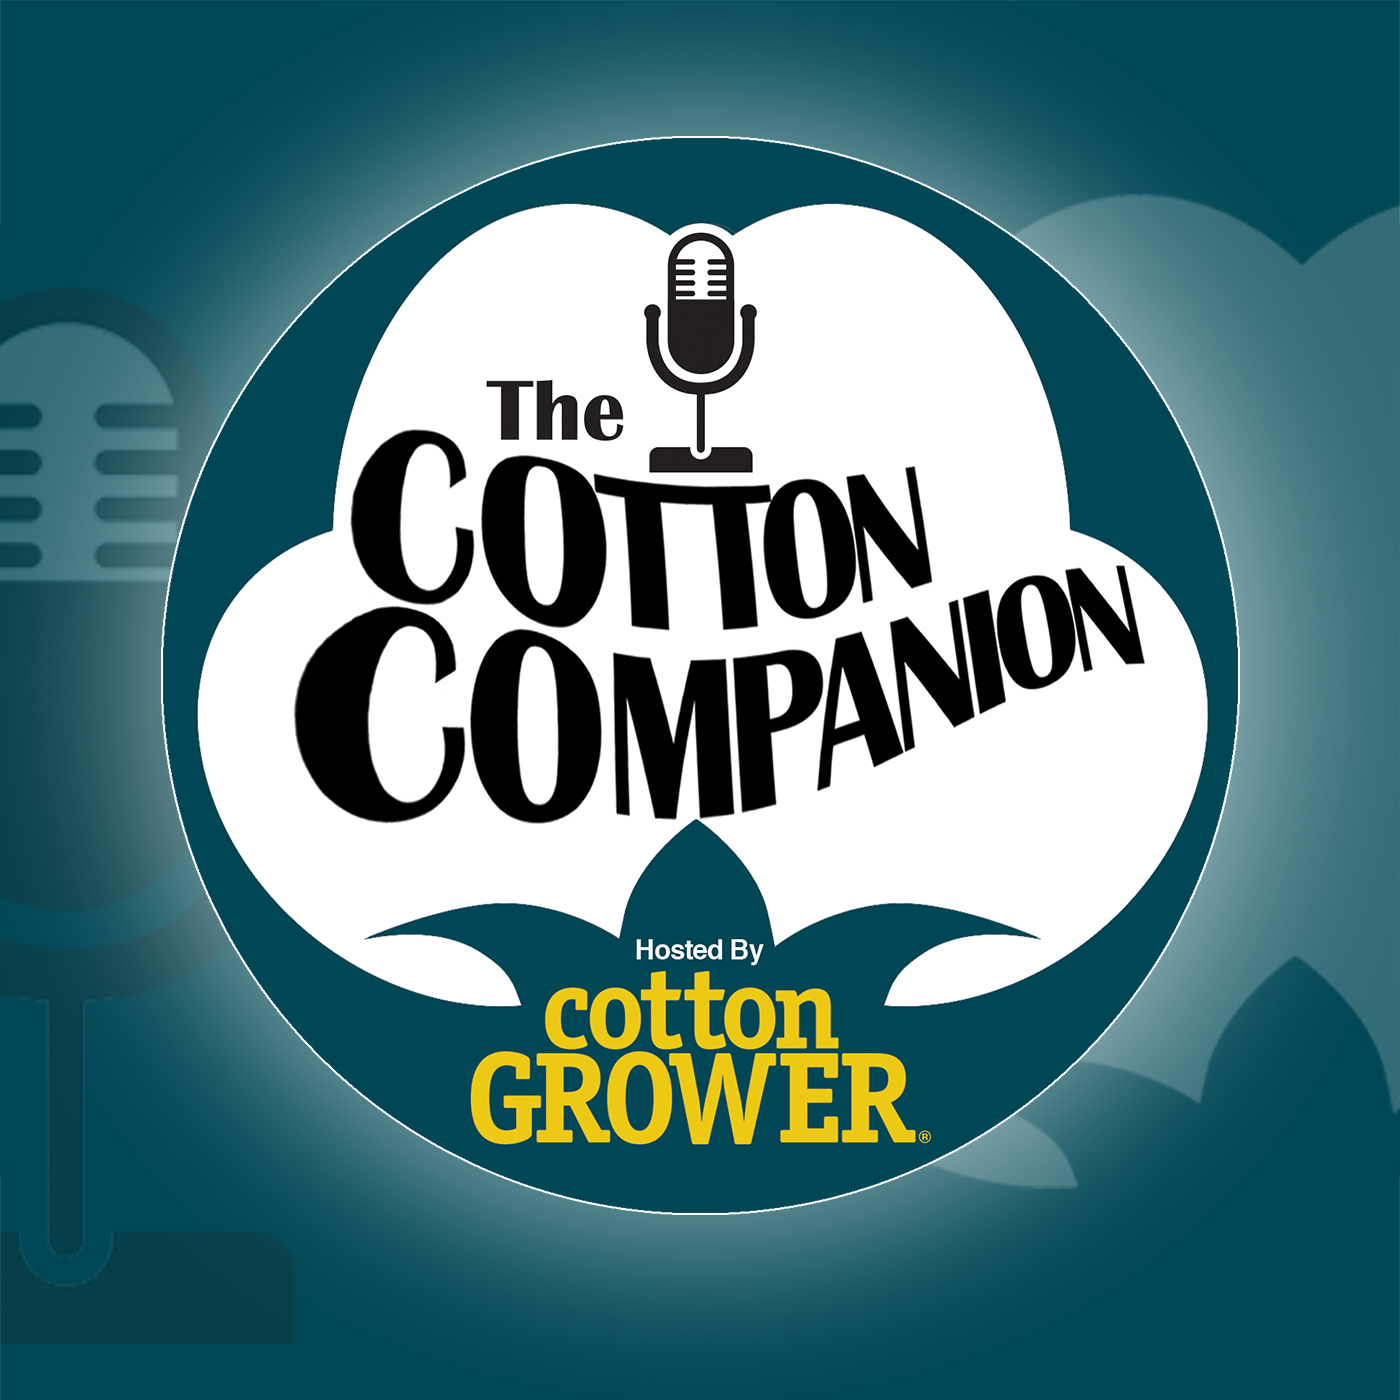 Cotton Companion